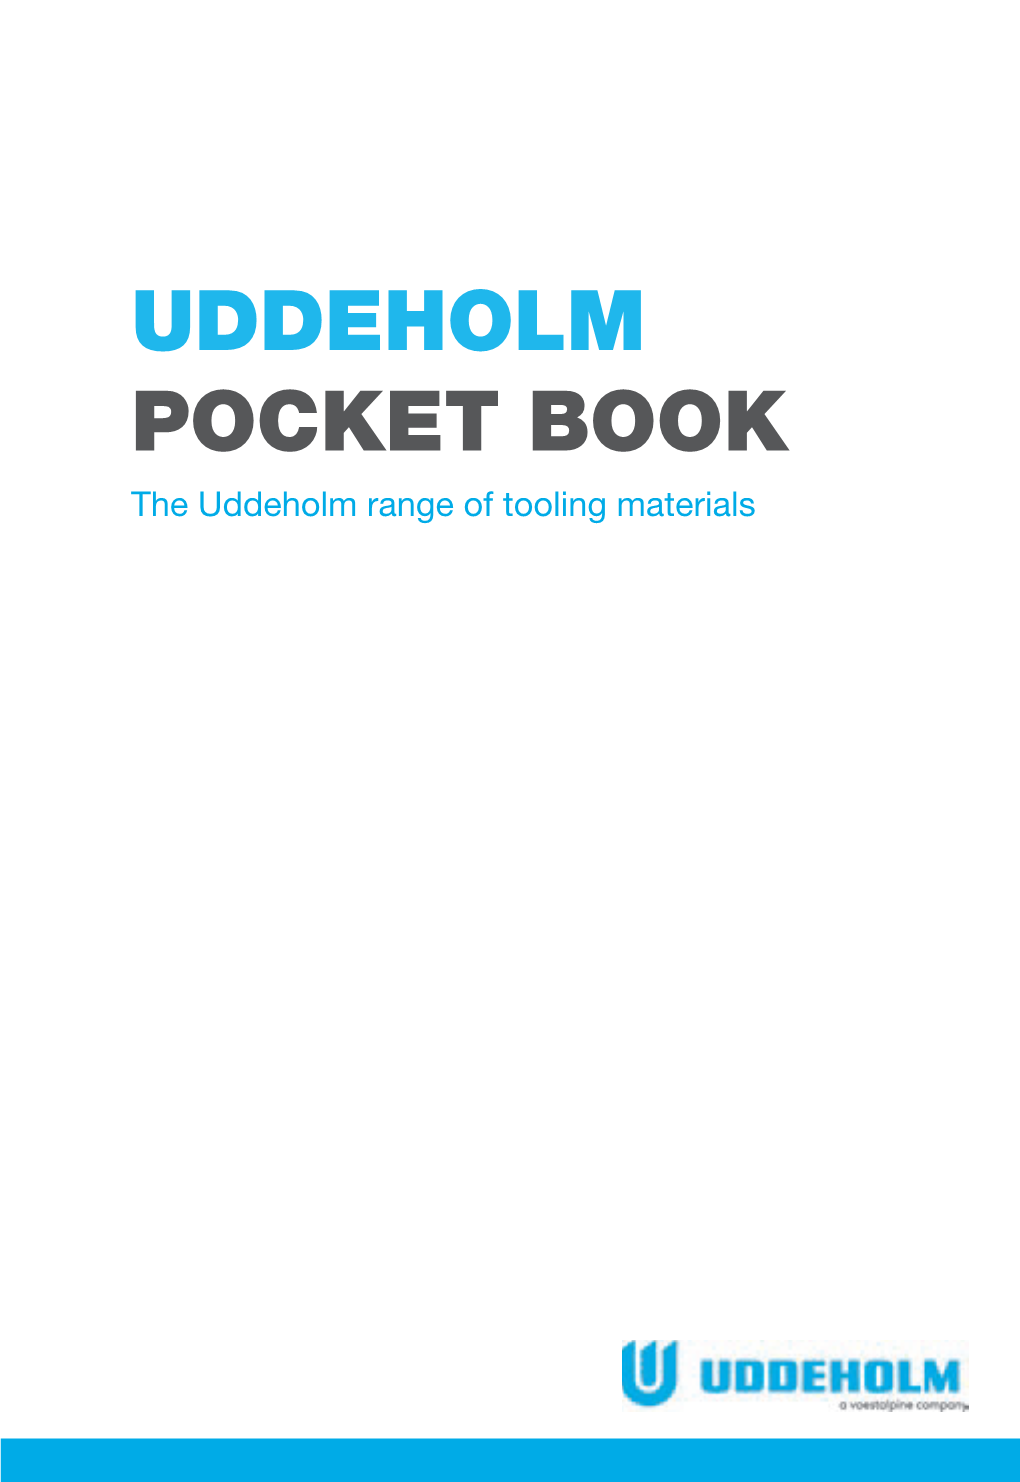 UDDEHOLM POCKET BOOK the Uddeholm Range of Tooling Materials CONTENTS